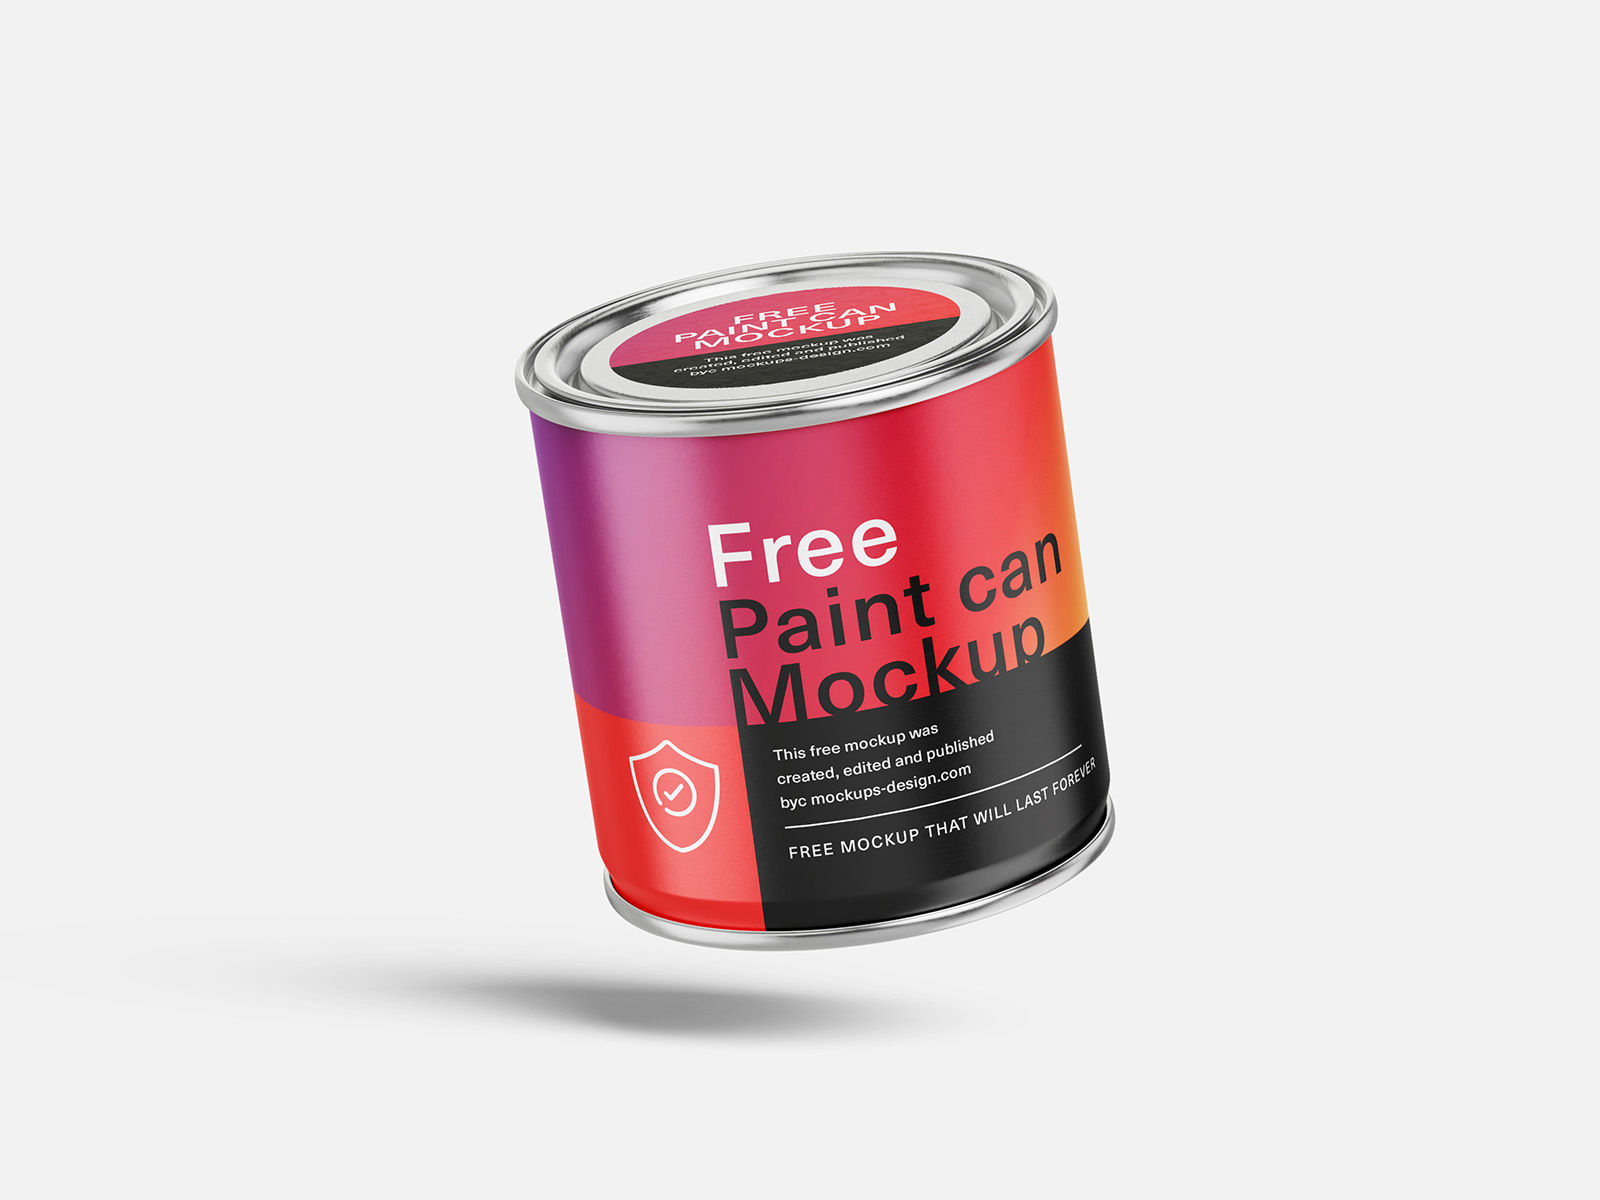 Free paint can mockup - Mockups Design